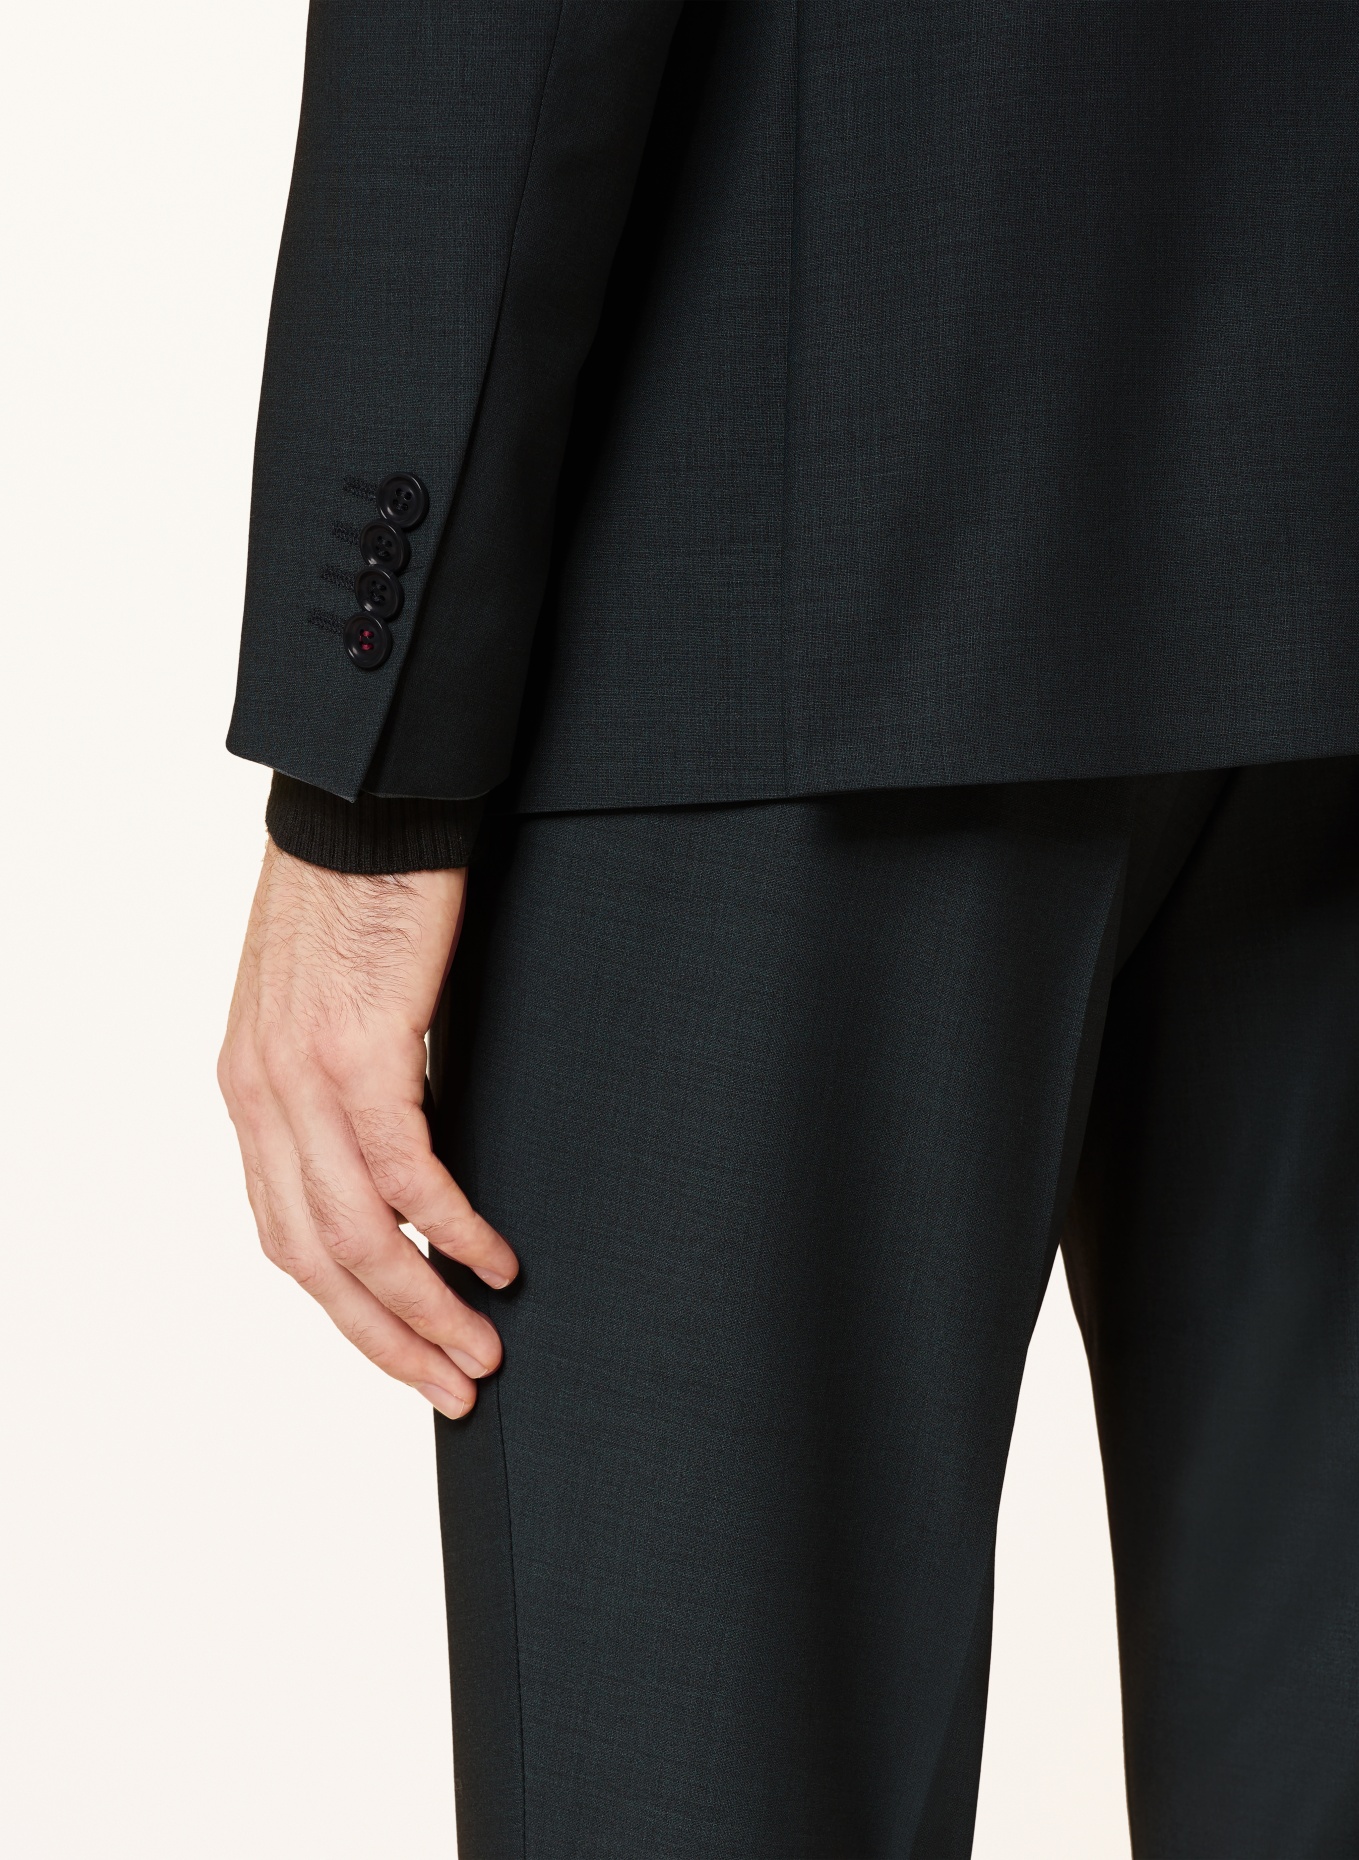 CG - CLUB of GENTS Suit jacket COLVIN slim fit, Color: 53 gruen dunkel (Image 6)